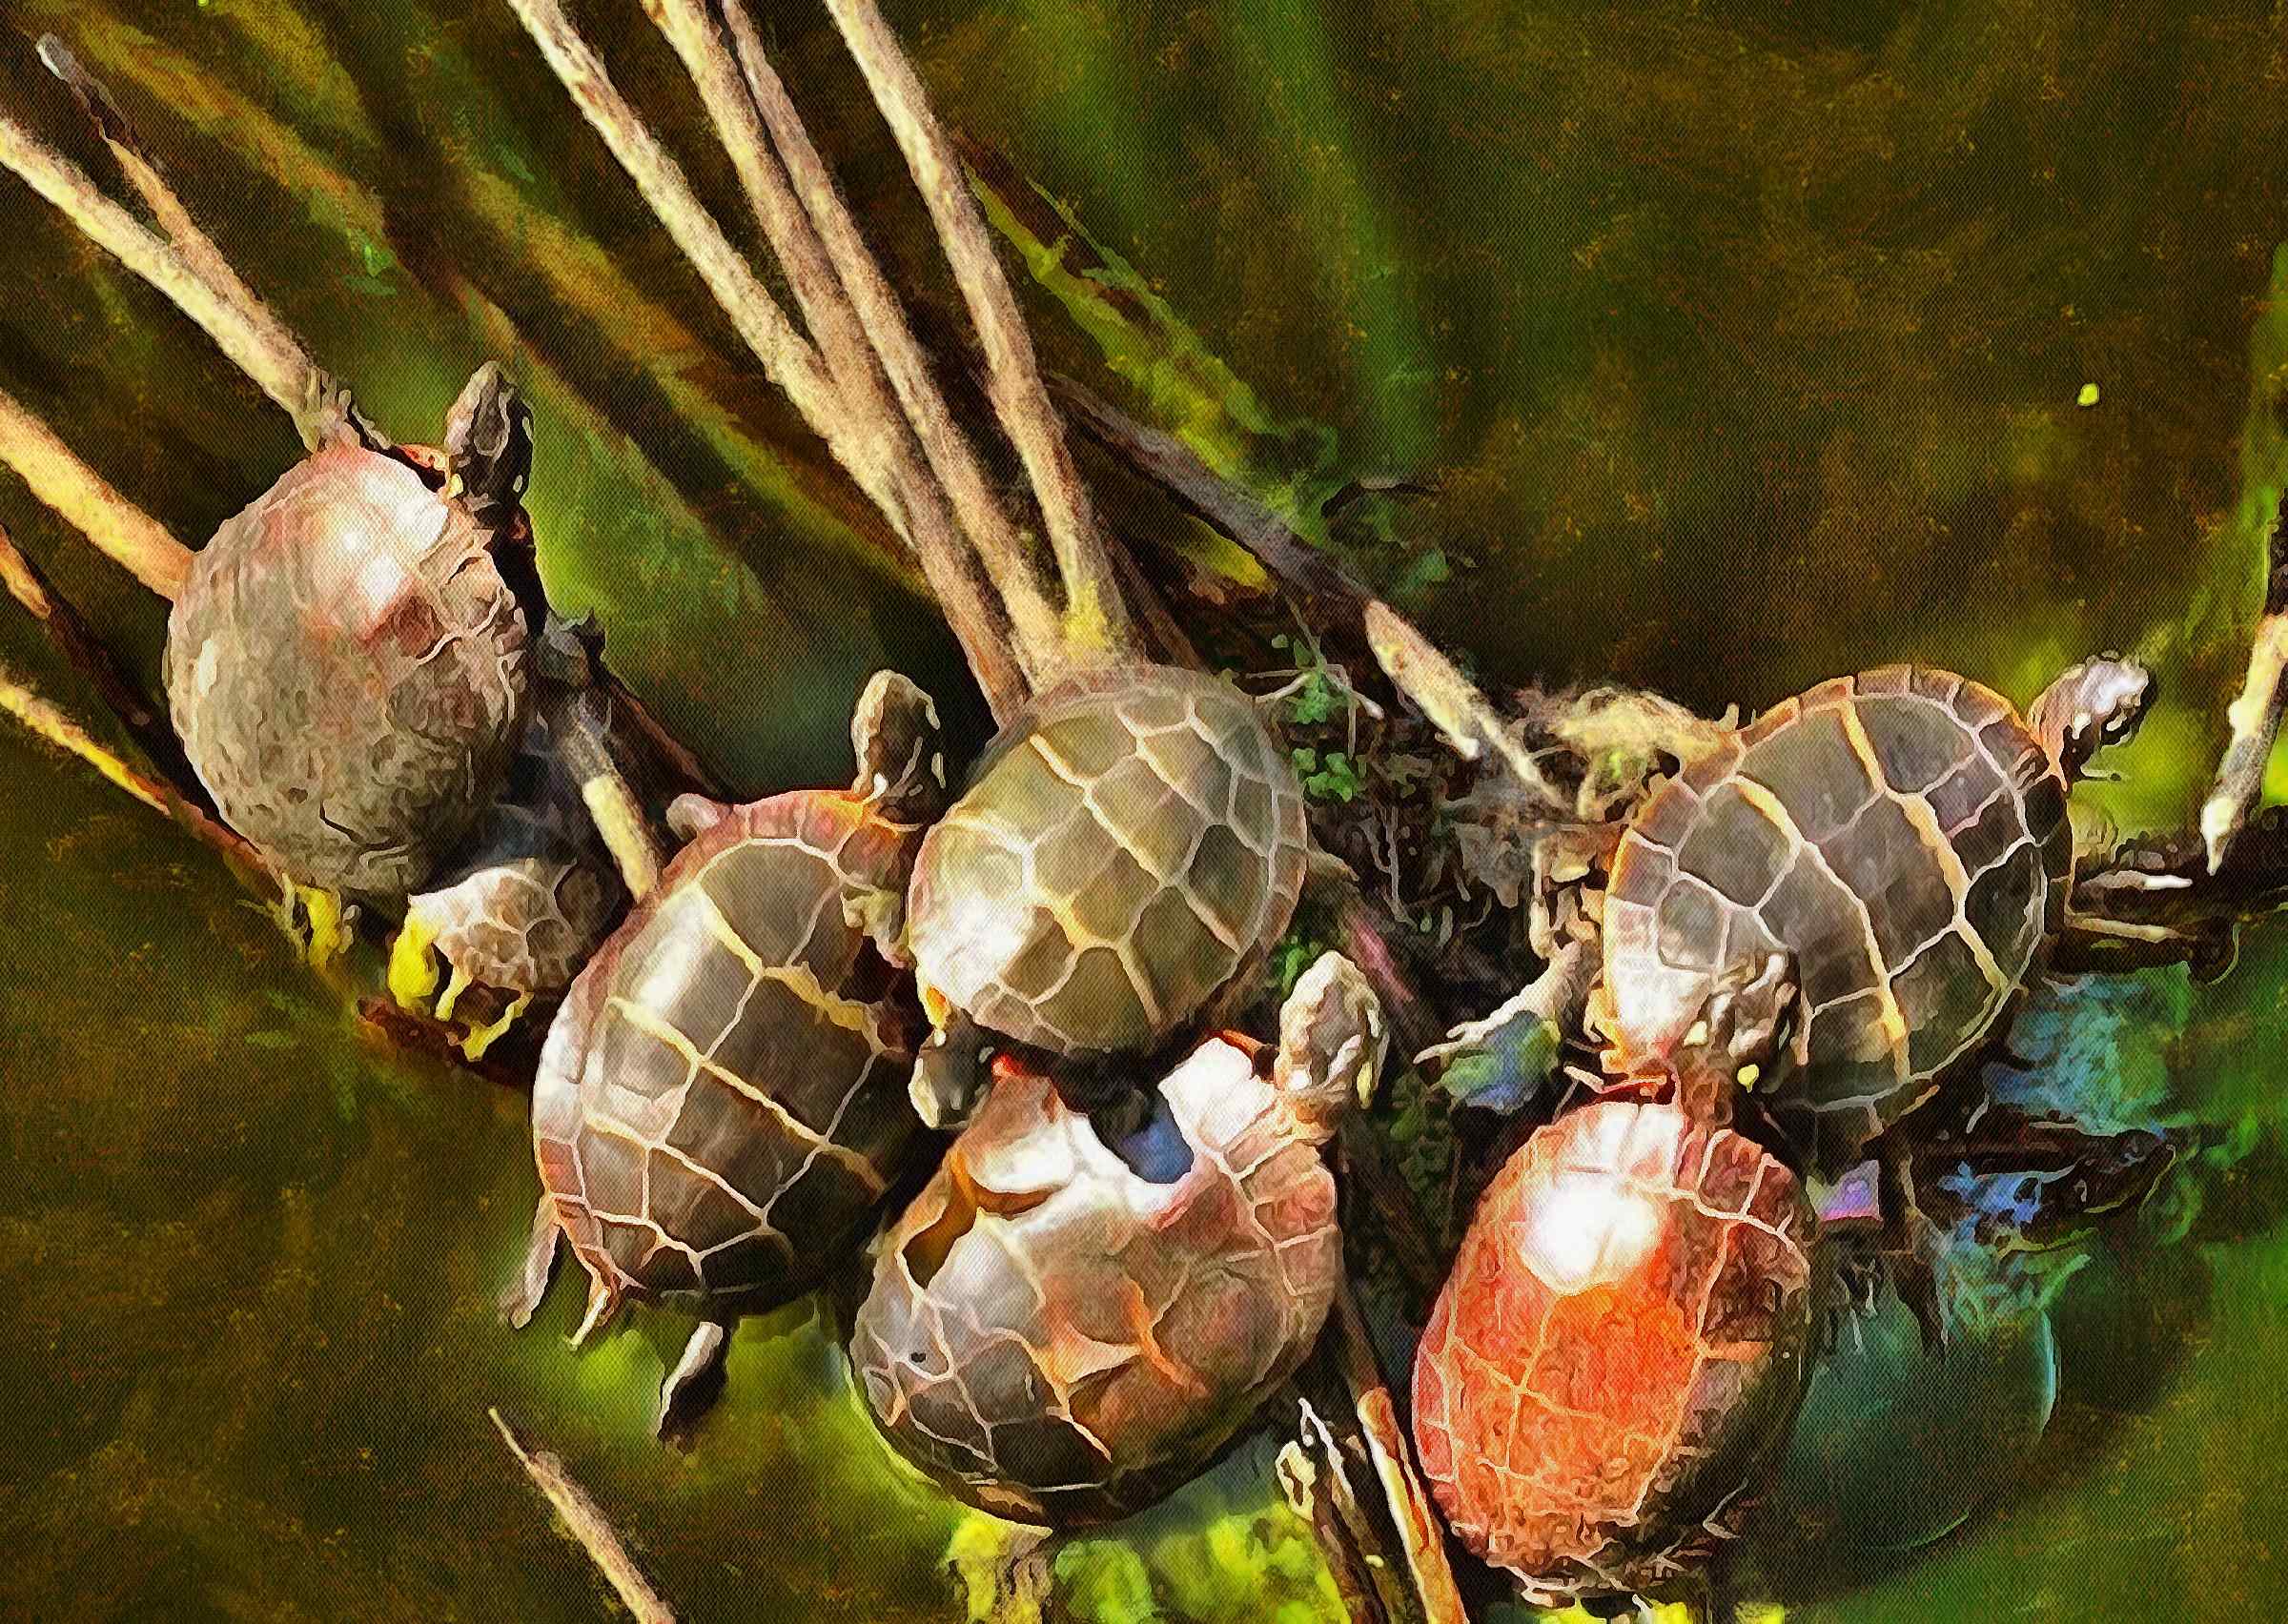 Tortoise, Turtle, loggerhead, terrapin, chelonian, leatherback, – Turtle free images, Tortoise free images, Turtle stock free images, Download free images turtles, turtle public domain images, tortoise public domain images!